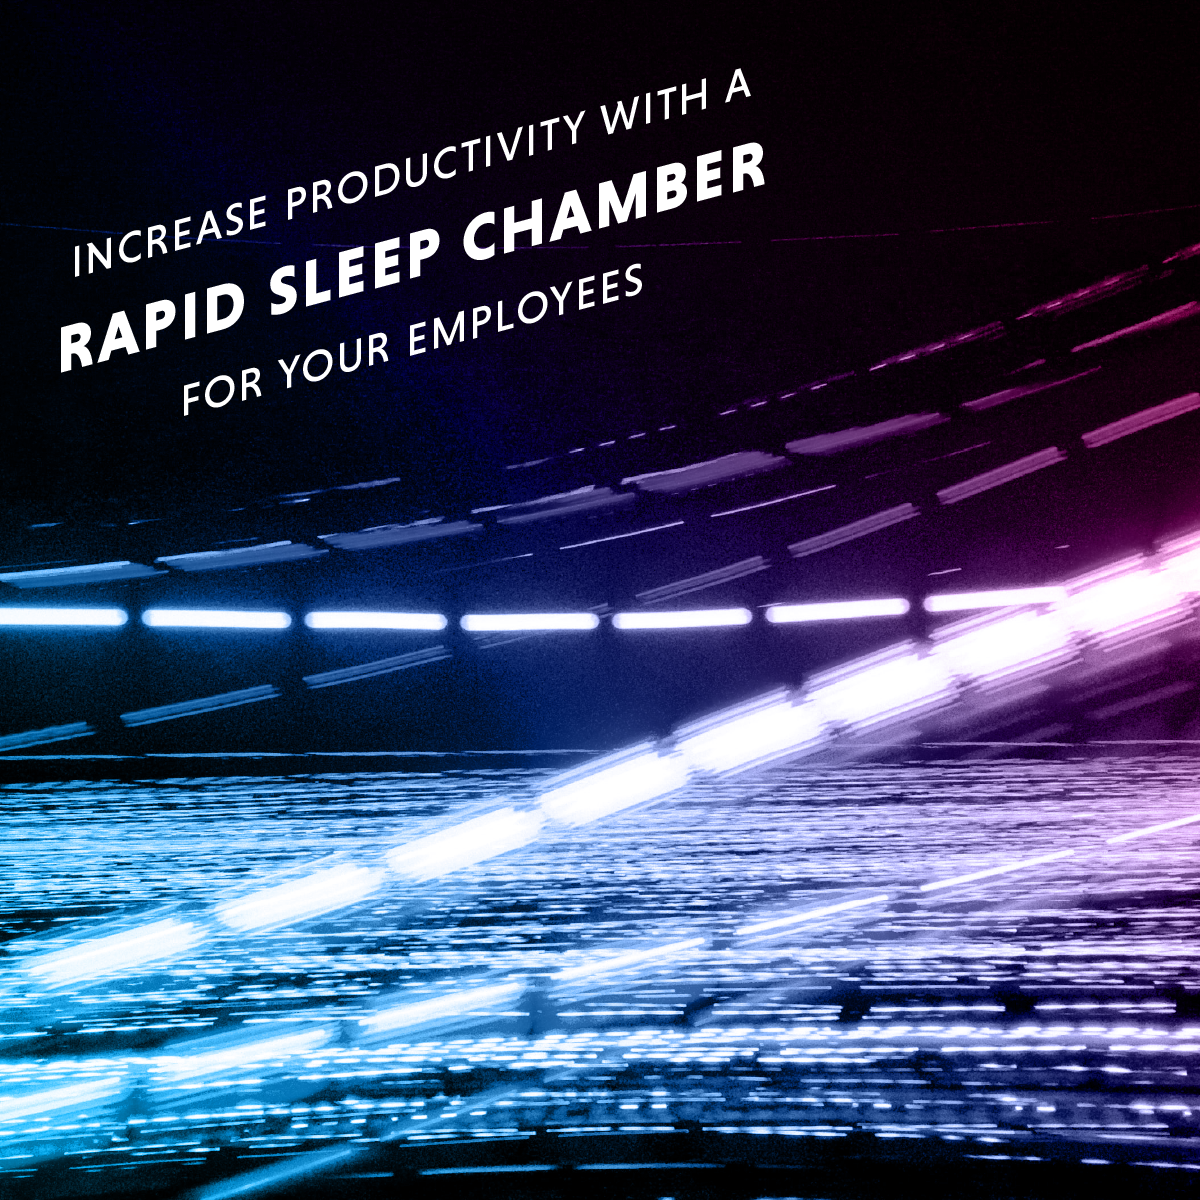 rapid sleep chamber.png